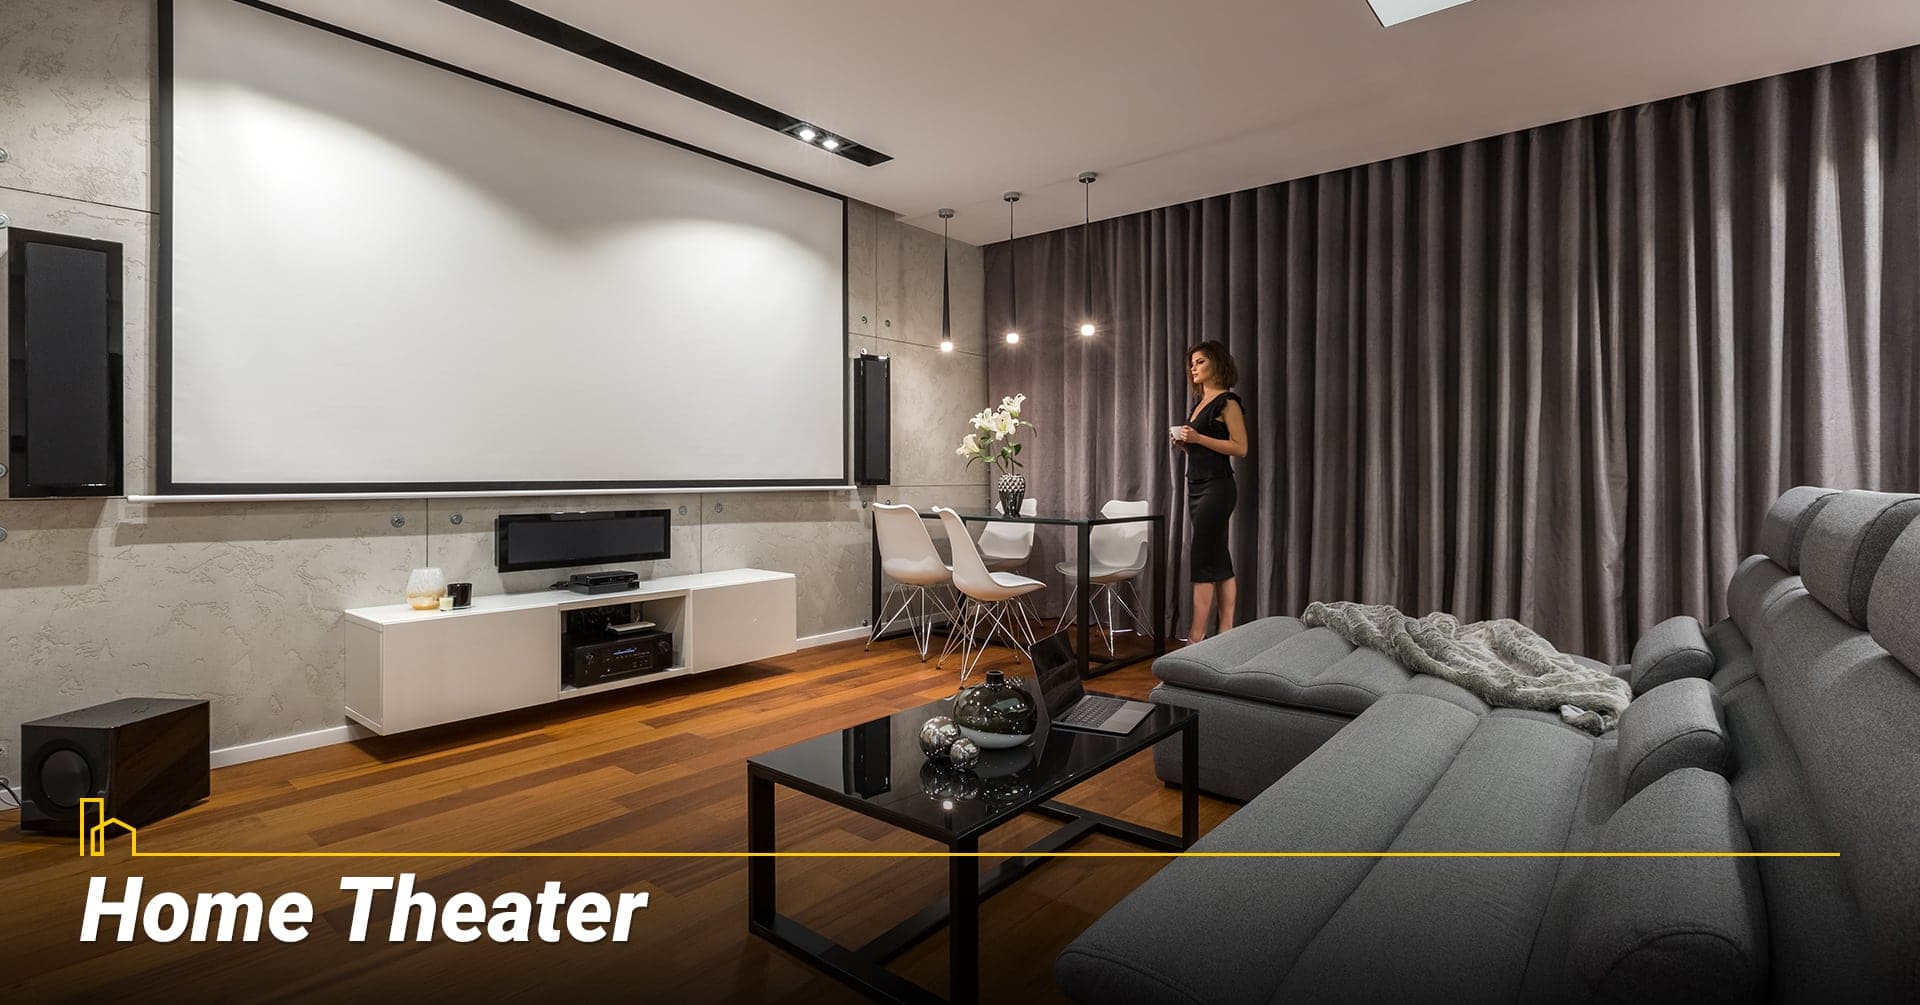 Home Theater, add an entertainment center